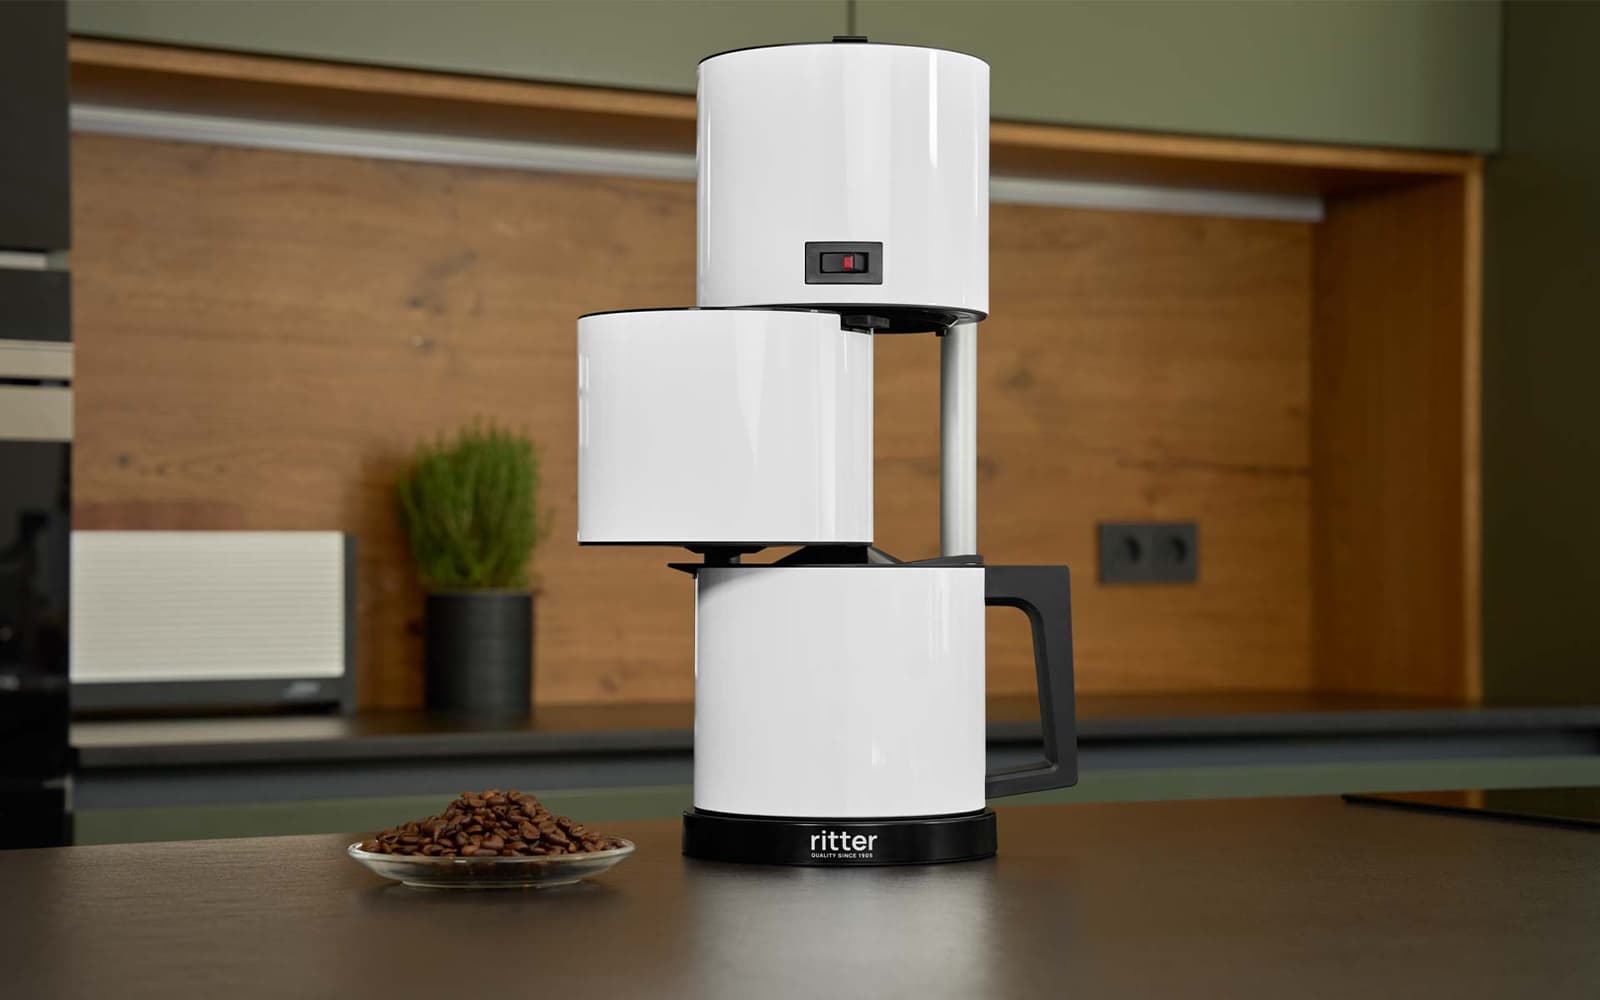 Kaffeemaschine - im hochwertige Filer-Kaffeemaschine Bauhaus-Design